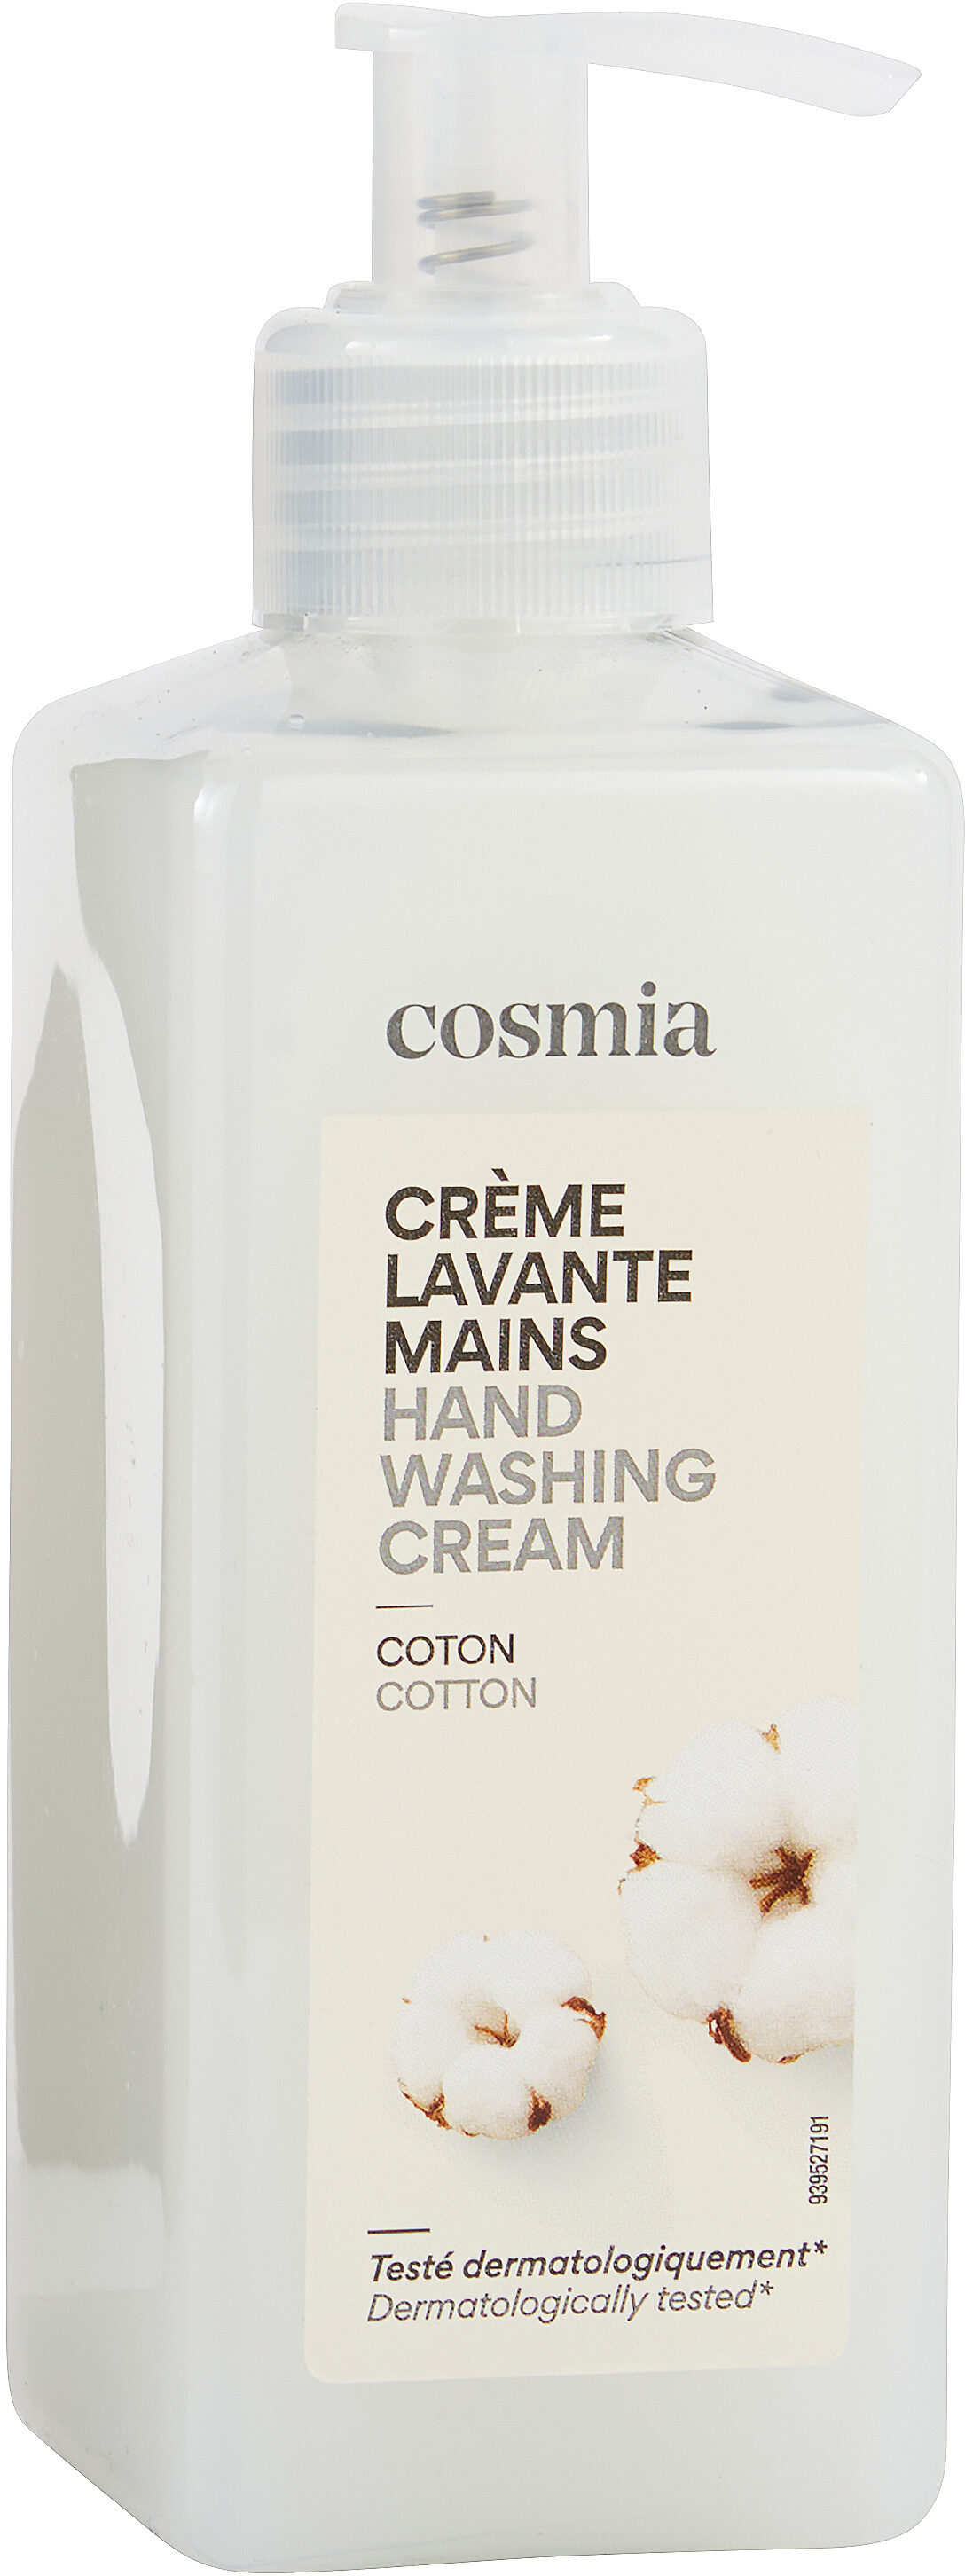 Crème lavante mains - מוצר - fr